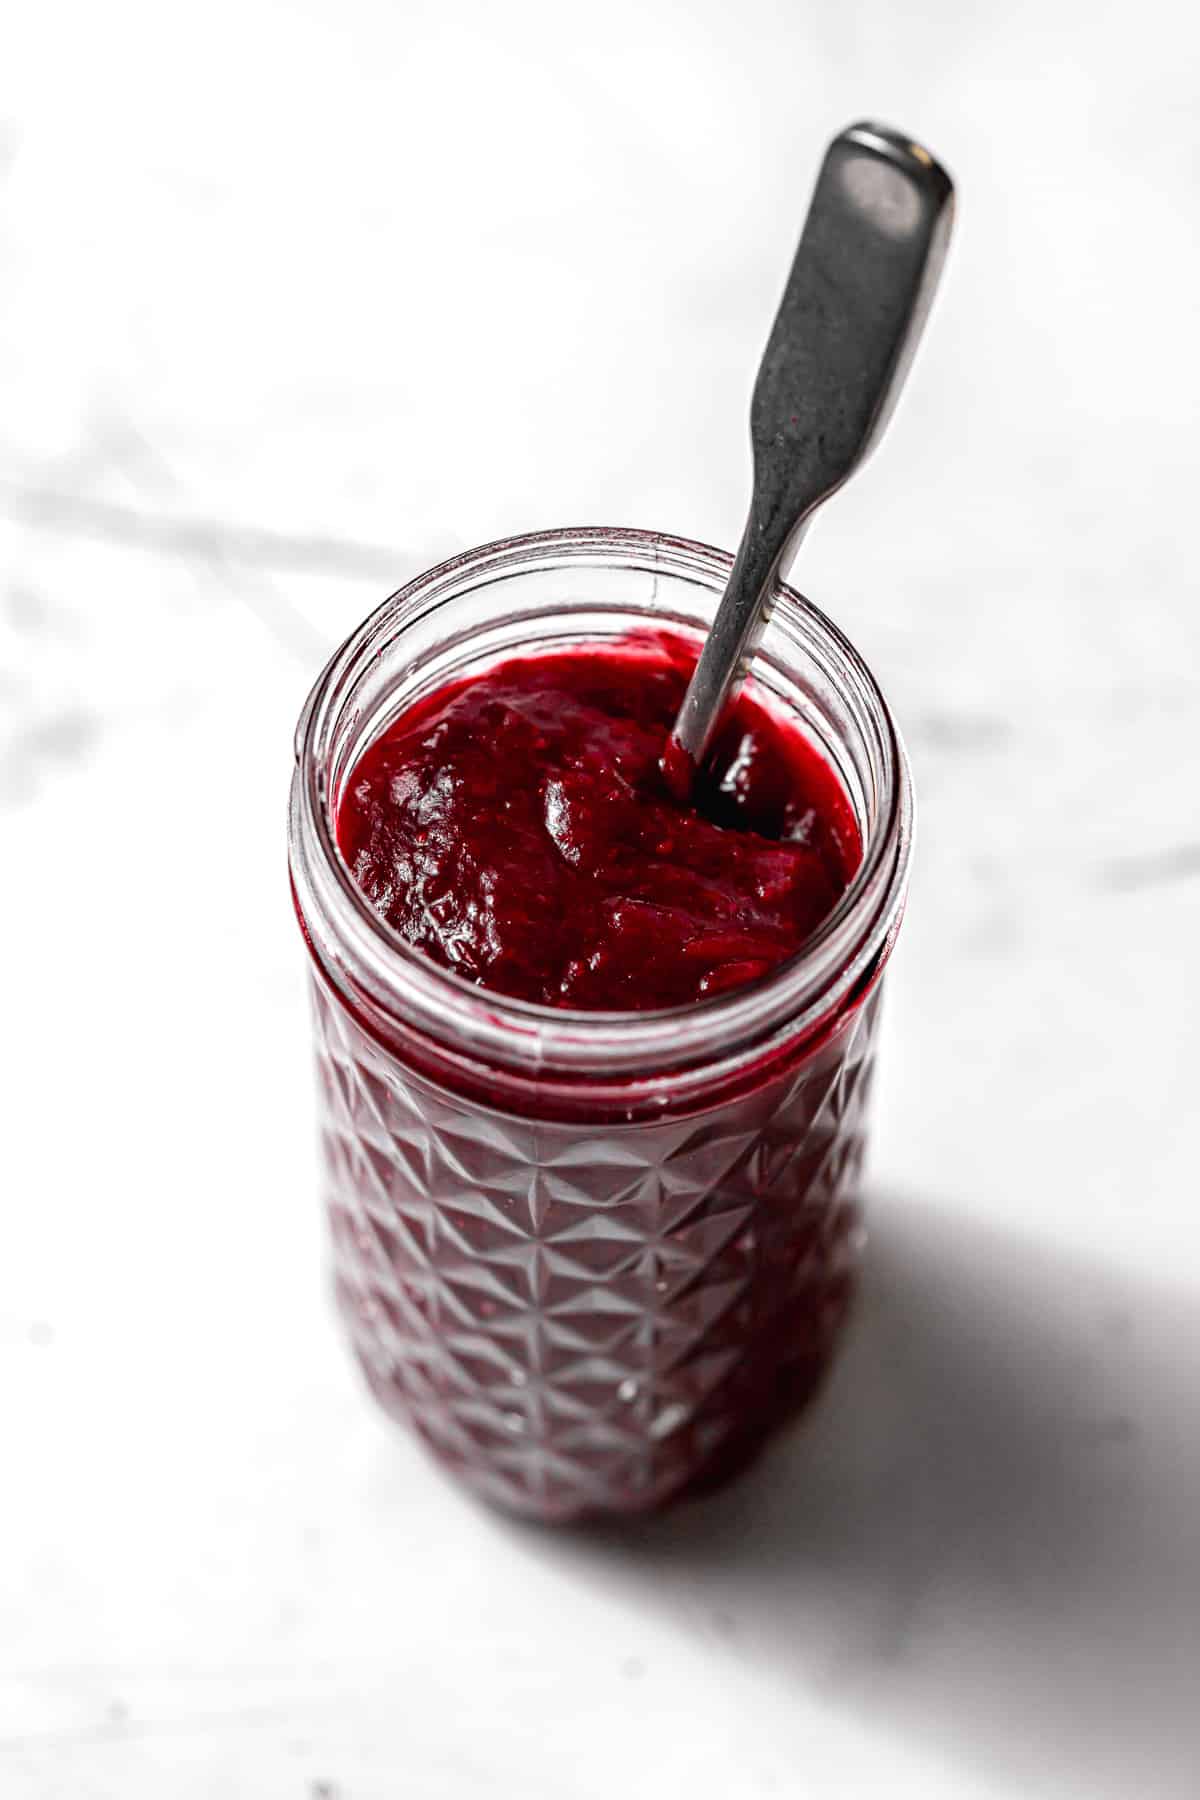 cranberry jam in glass jar